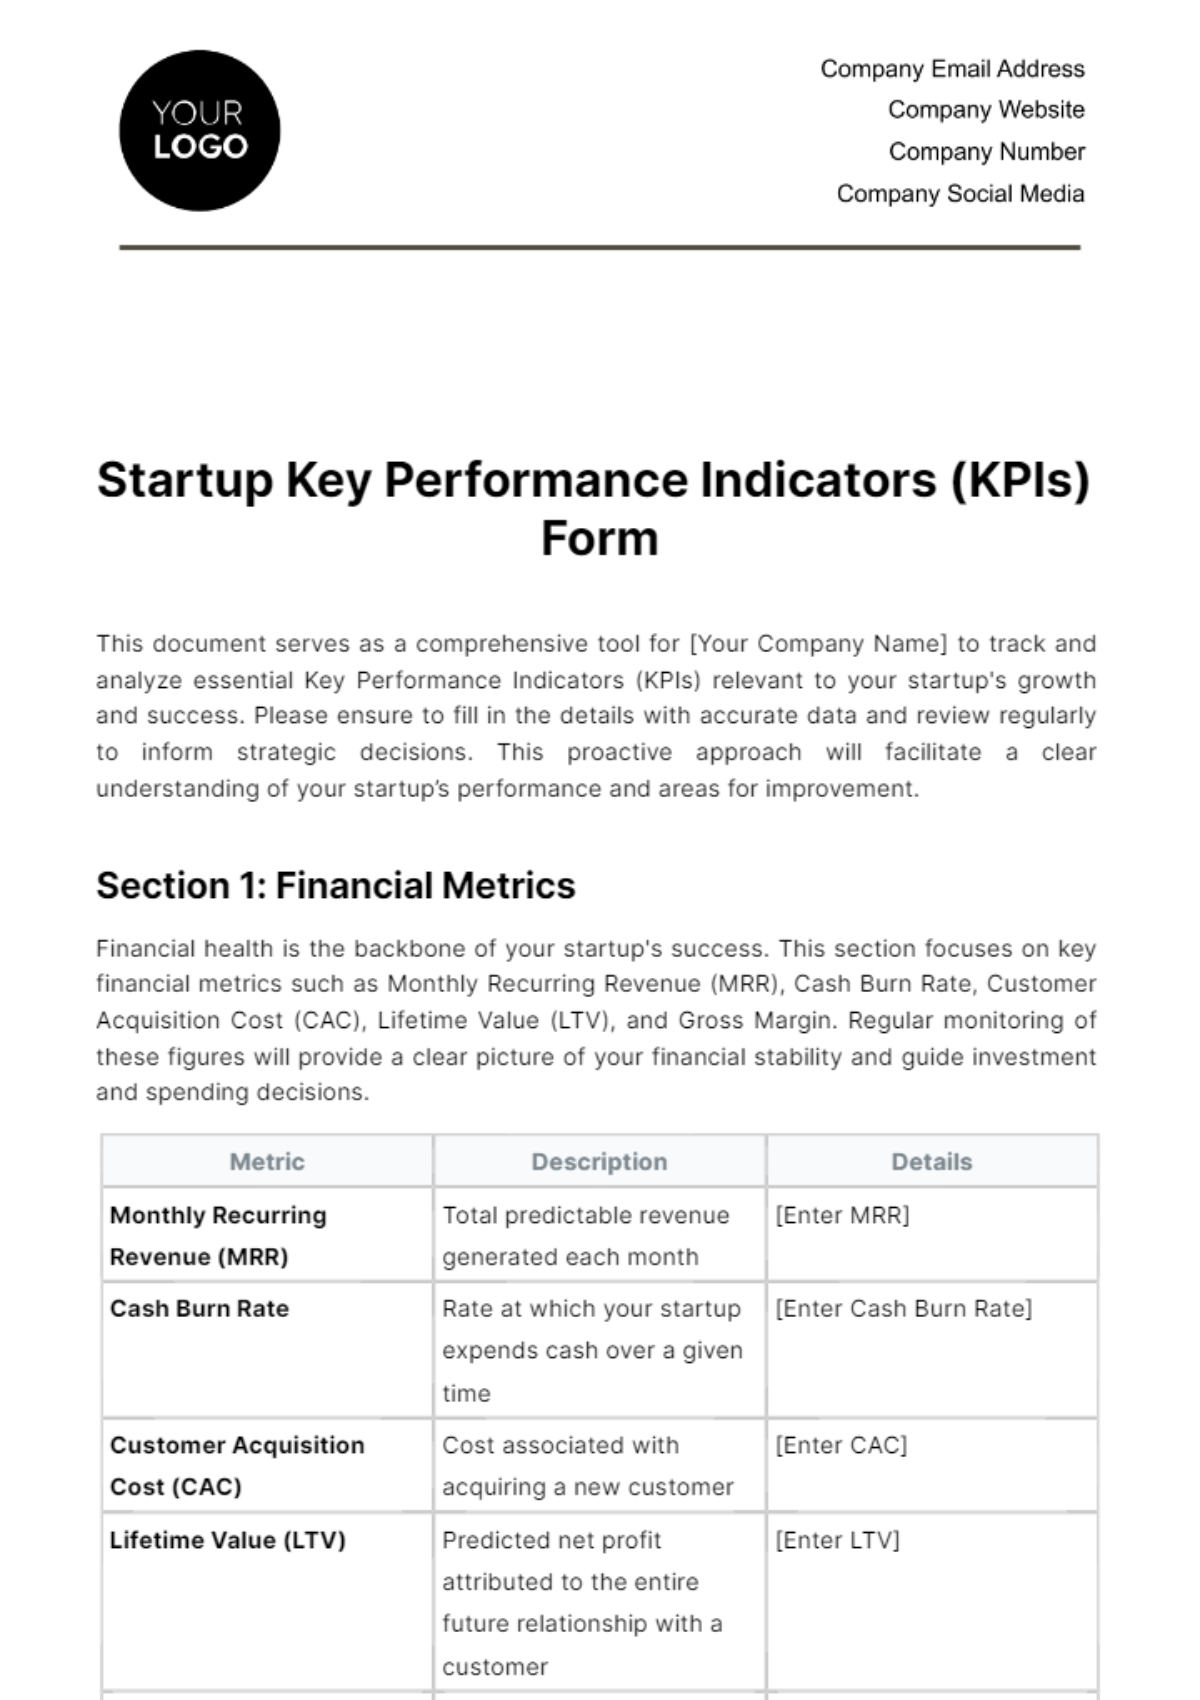 Startup Key Performance Indicators (KPIs) Form Template